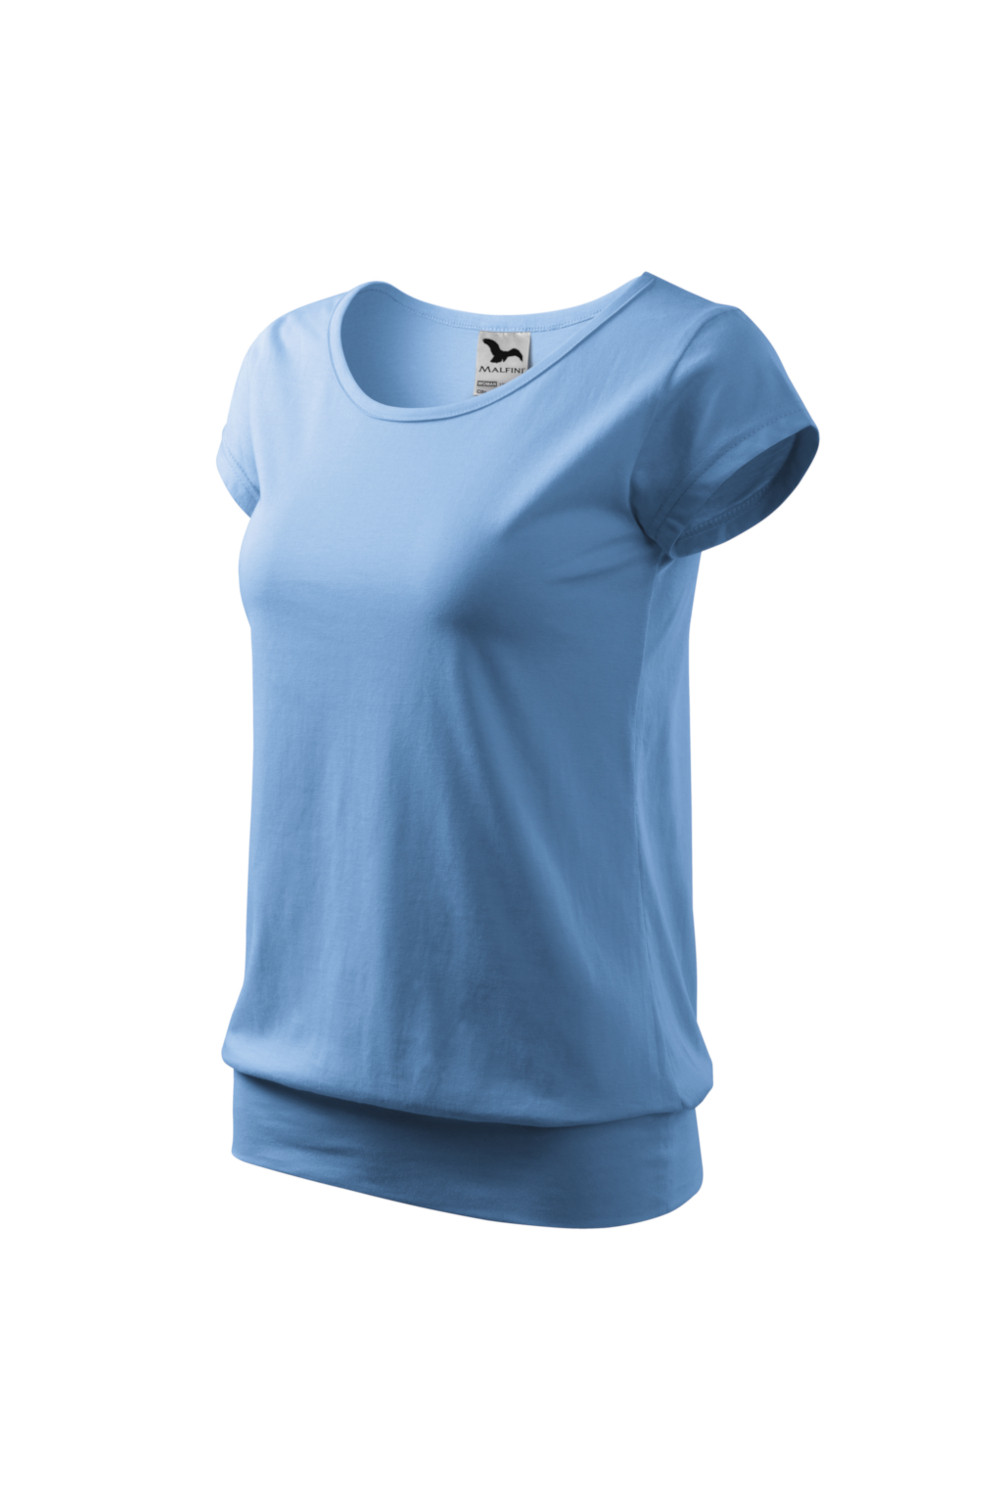 CITY 120 MALFINI Koszulka damska 100% bawełna t-shirt błękit